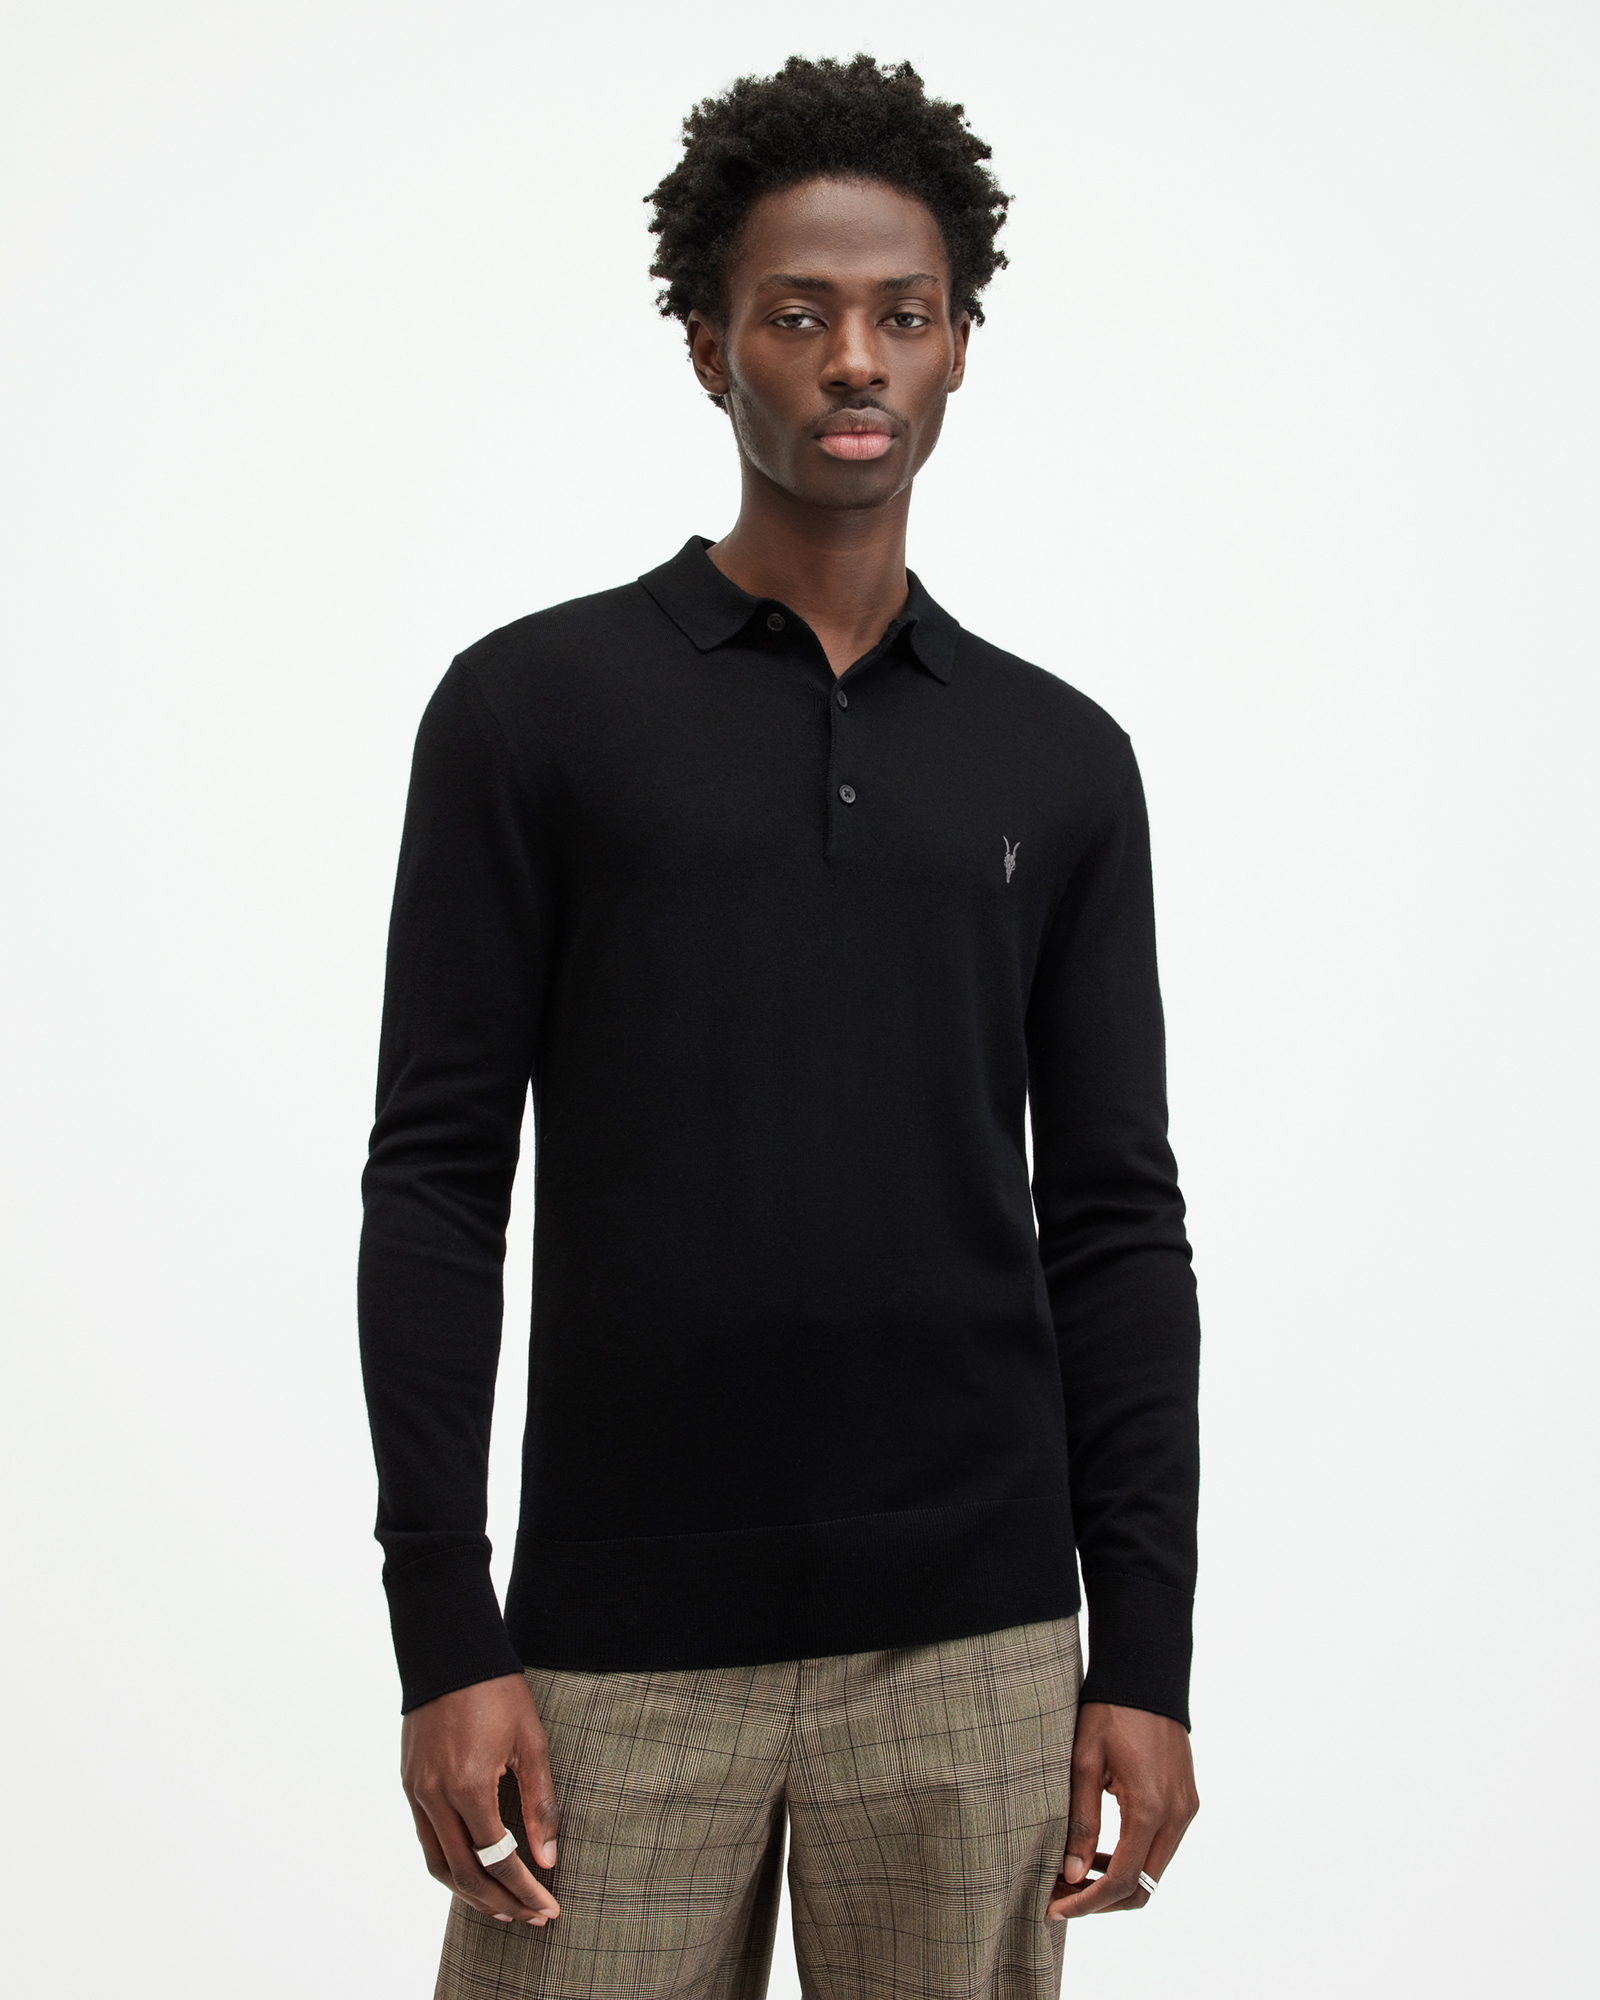 AllSaints Men's Merino Wool Lightweight Mode Long Sleeve Polo Shirt, Black, Size: S